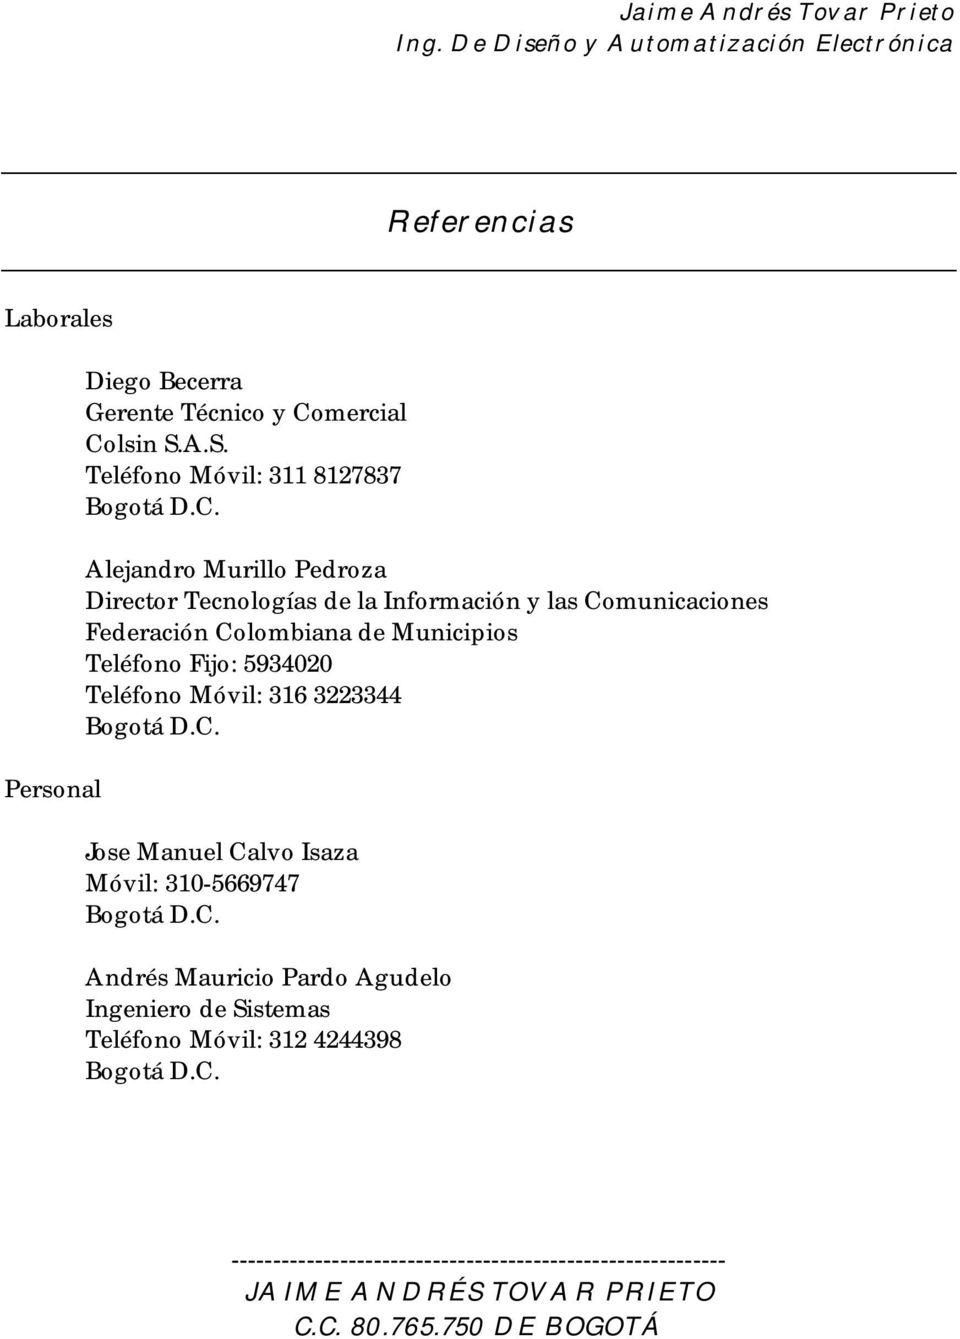 Colombiana de Municipios Teléfono Fijo: 5934020 Teléfono Móvil: 316 3223344 Jose Manuel Calvo Isaza Móvil: 310-5669747 Andrés